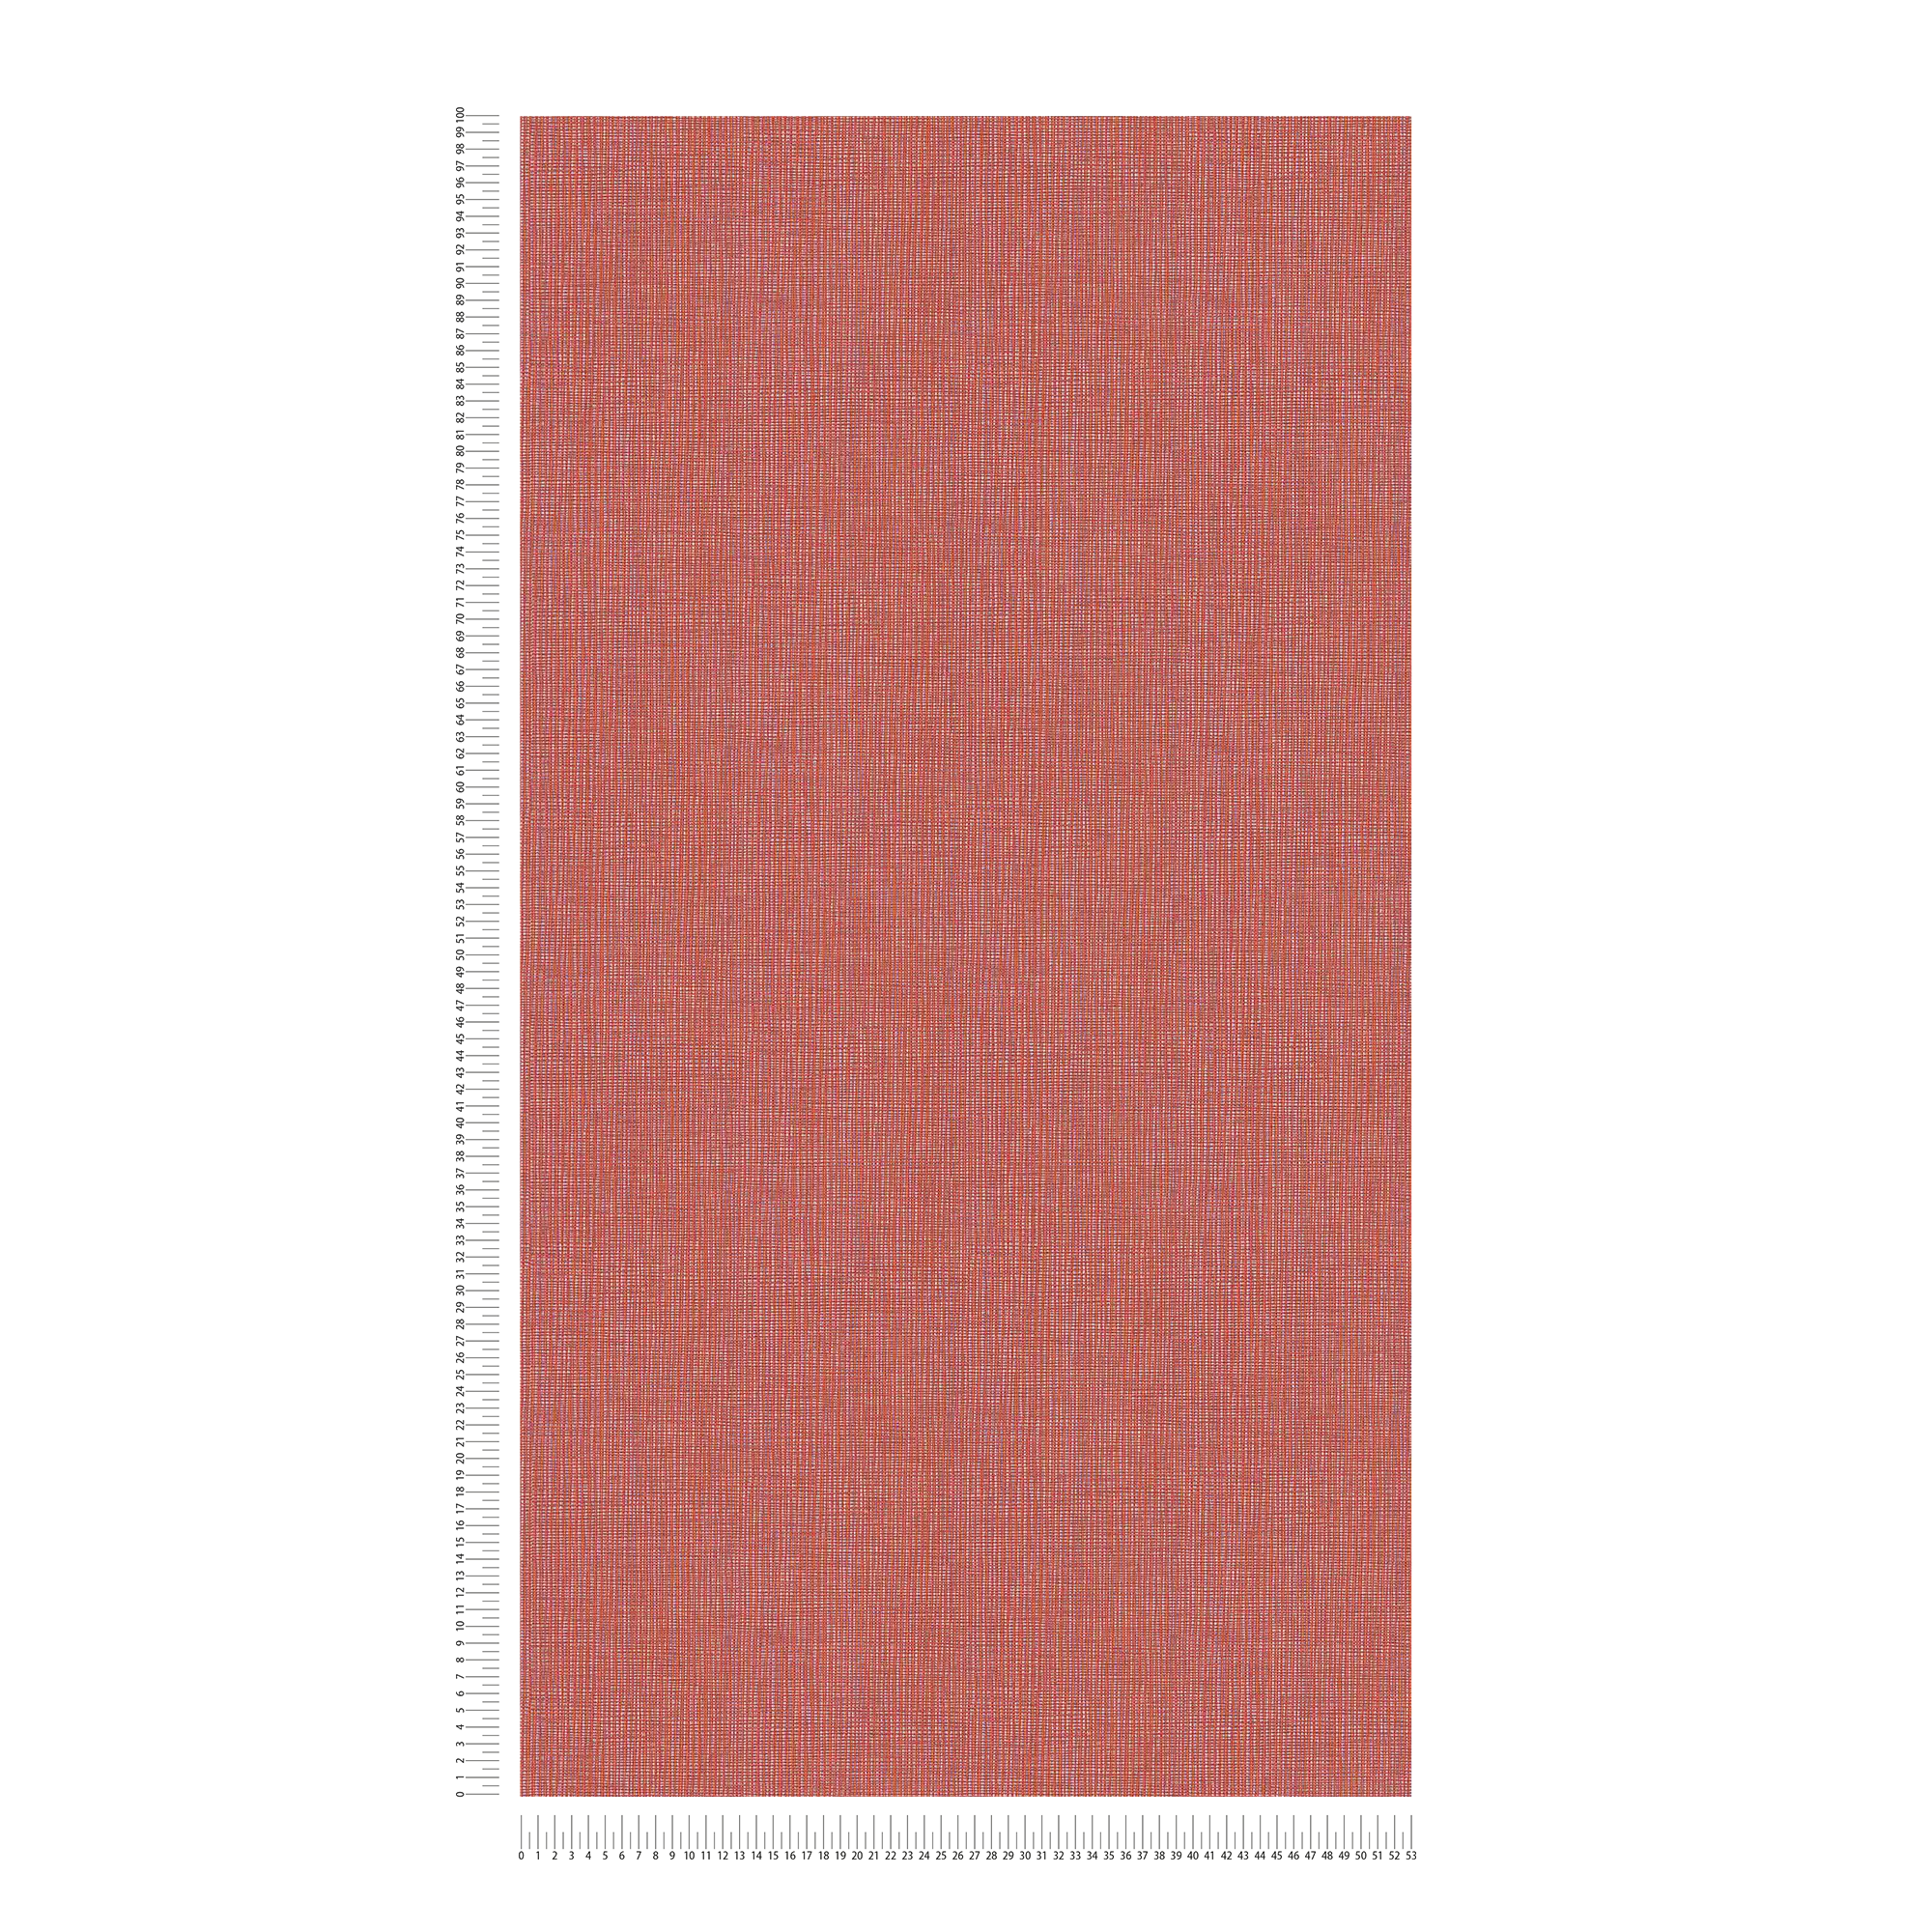             Behang Rood met Textiel Patroon in Rood Oranje & Paars
        